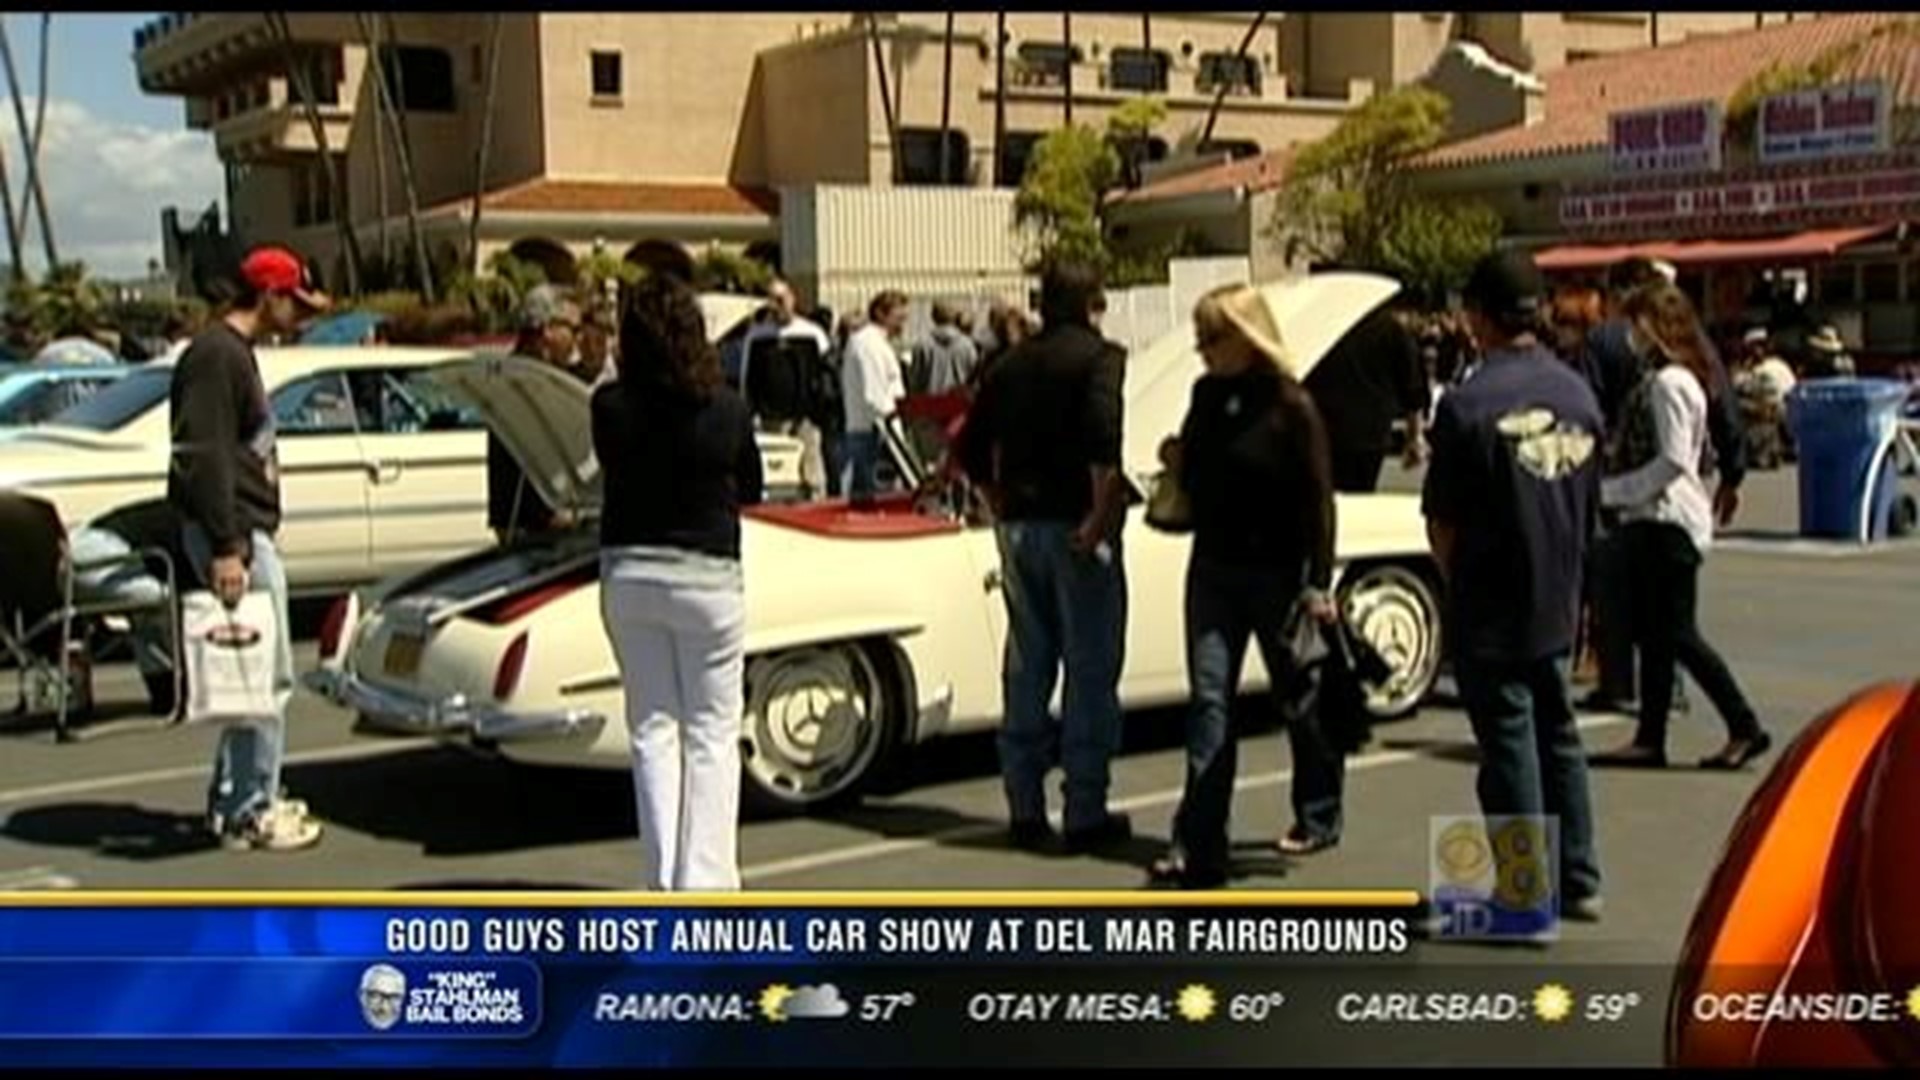 Good Guys host annual car show at Del Mar Fairgrounds